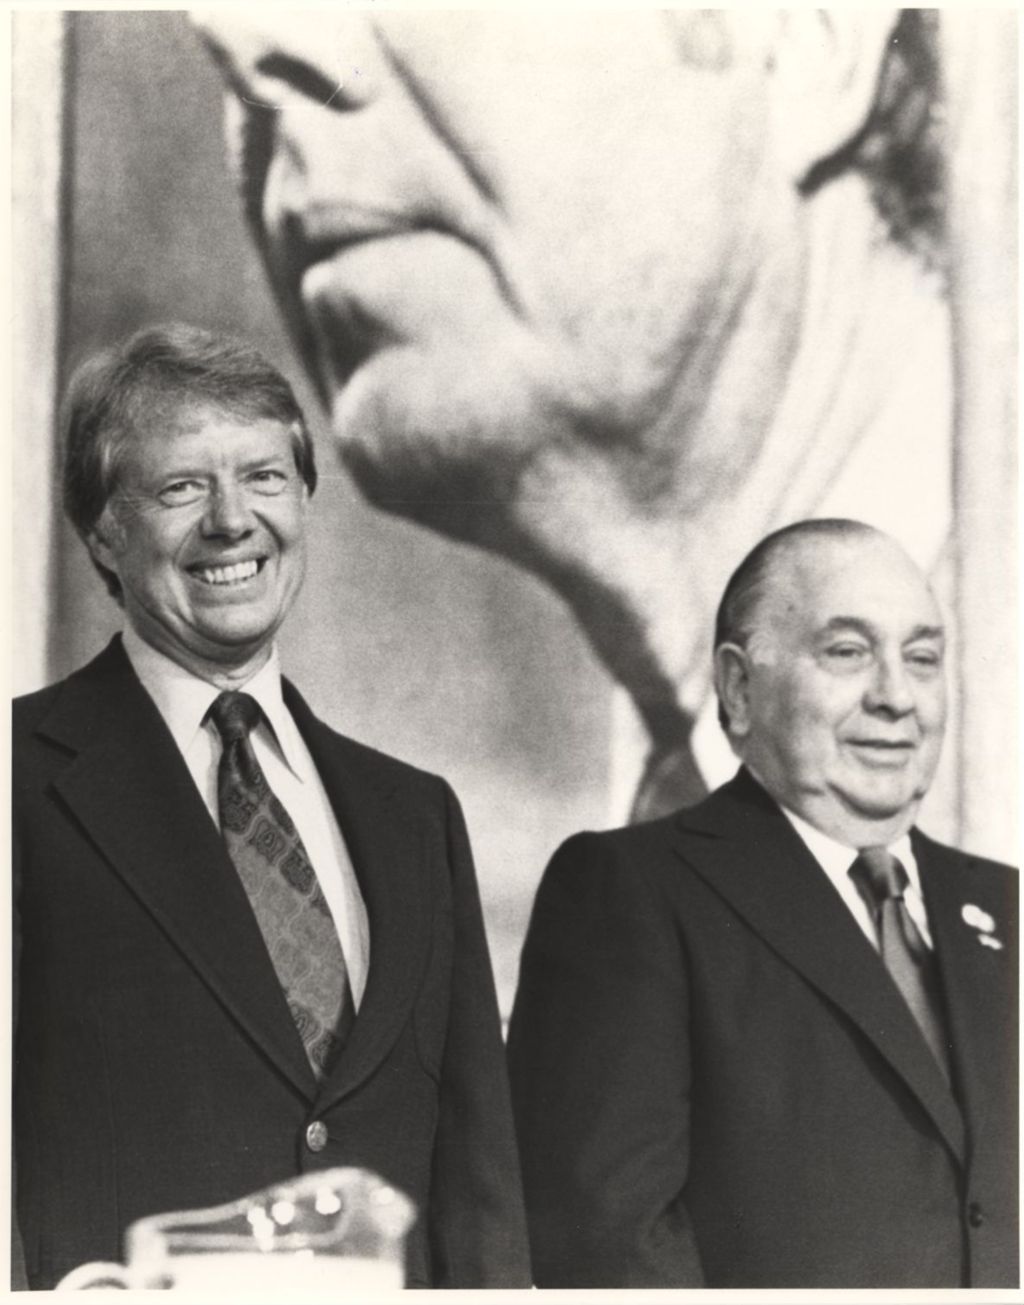 Jimmy Carter and Richard J. Daley